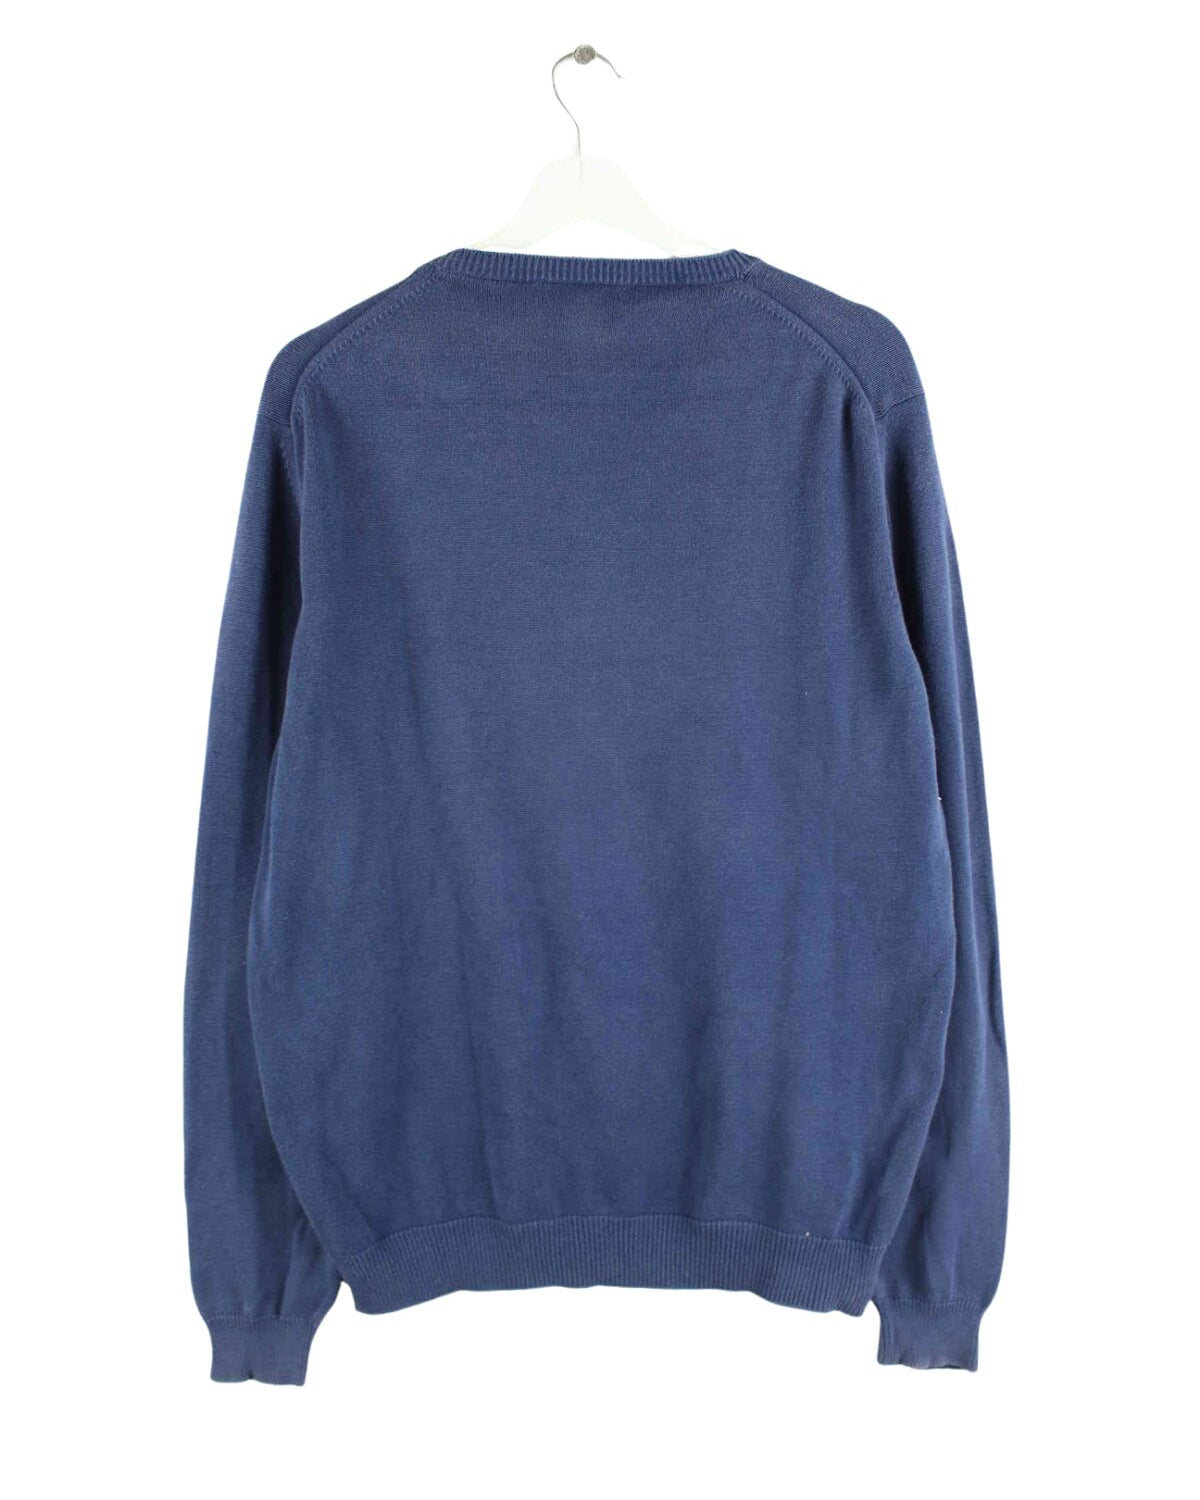 Burberry Basic Pullover Blau L (back image)